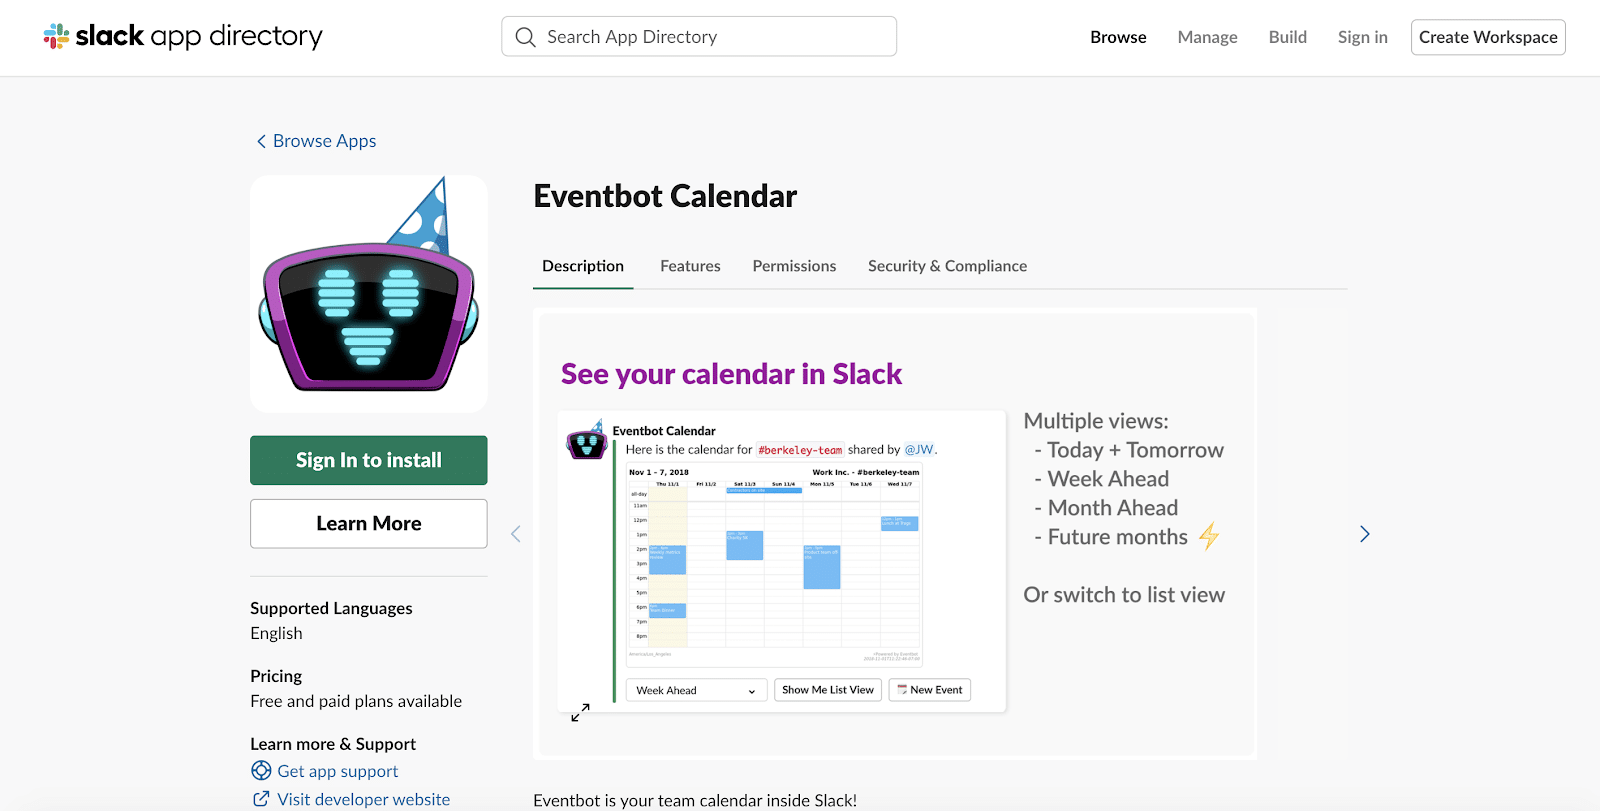 Eventbot Calendar app for Slack